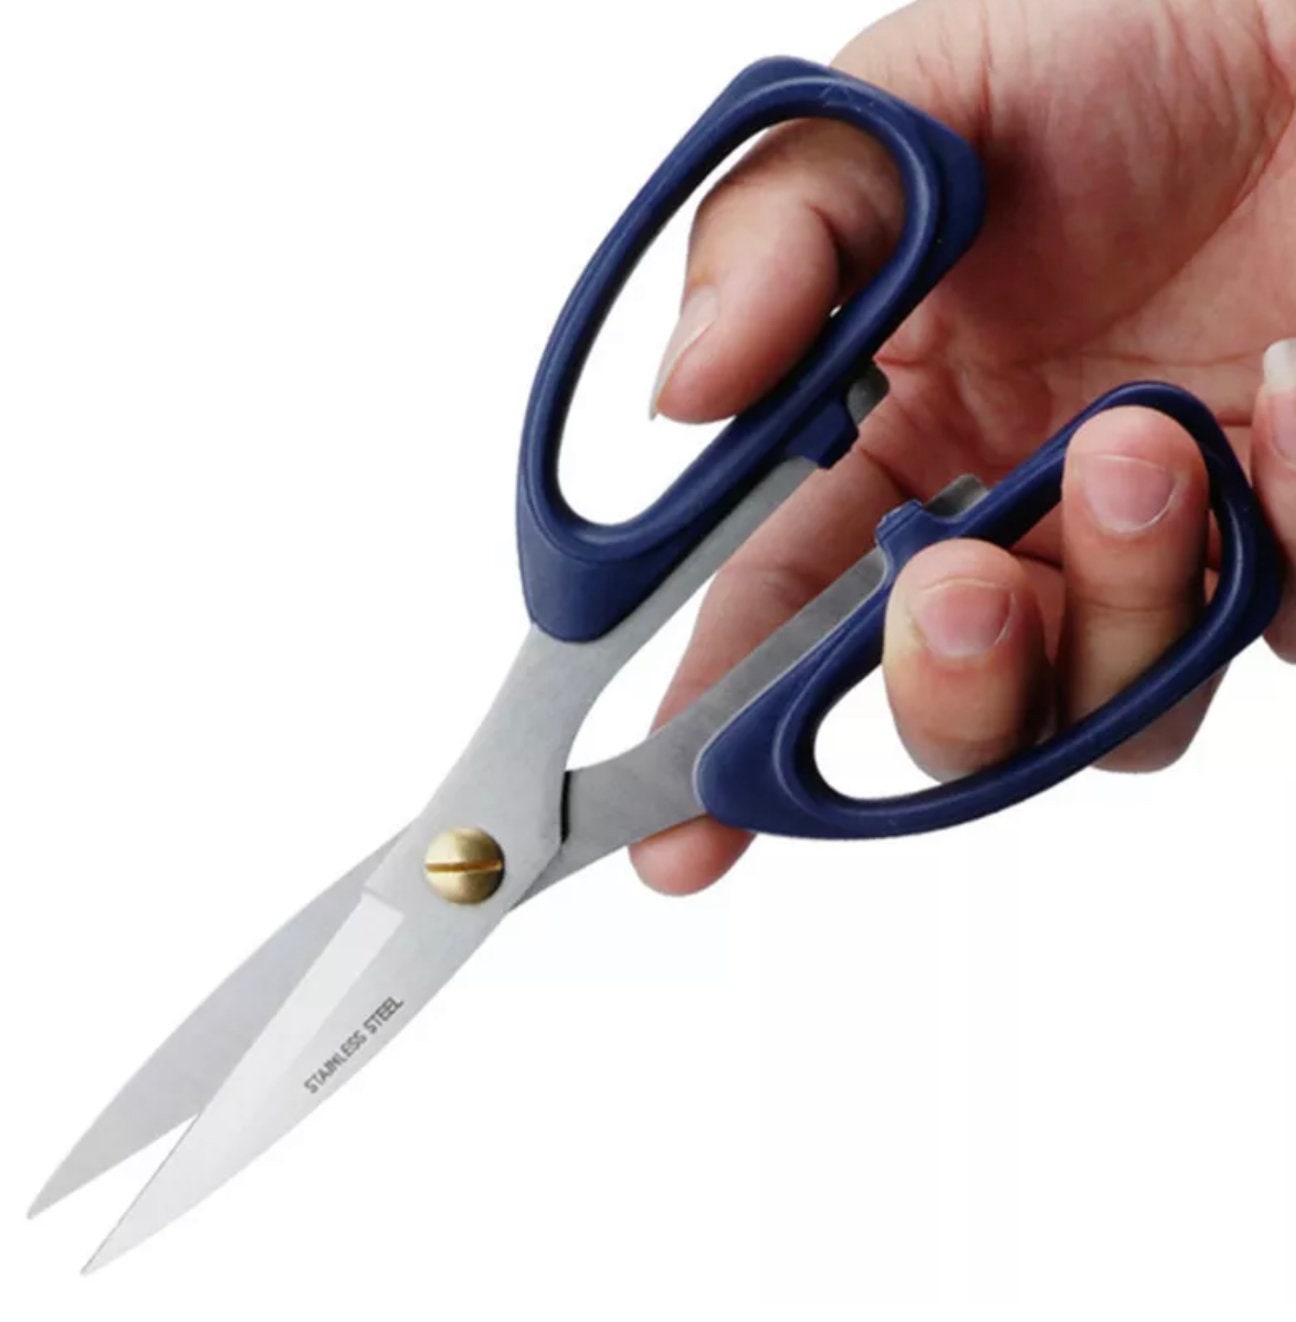 Grand Opening Kit-Ribbon, 10 inch Metallic Blue Bows, & Blue Handle  Scissors-Easy Ribbon Cutting Ceremonial Supplies Pack (Blue Kit)